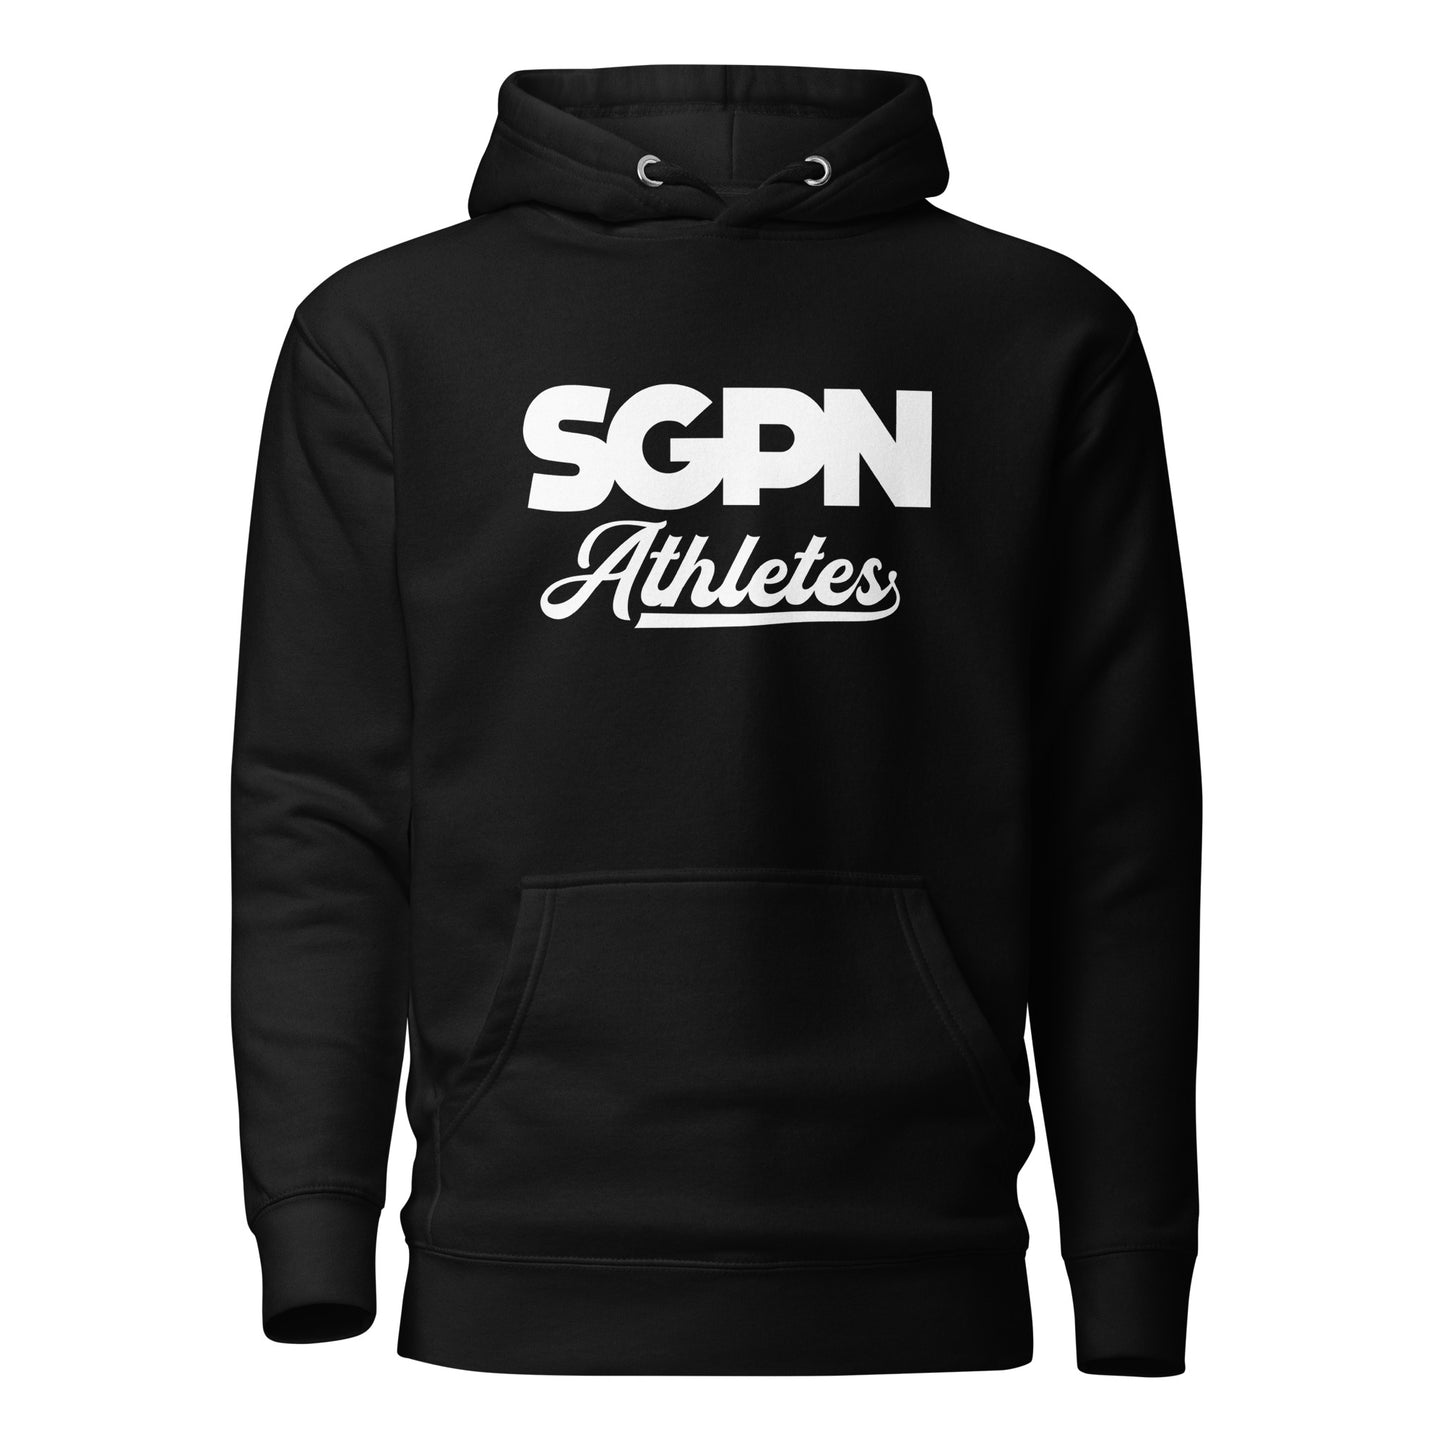 SGPN Athletes - Unisex Hoodie (White Logo)